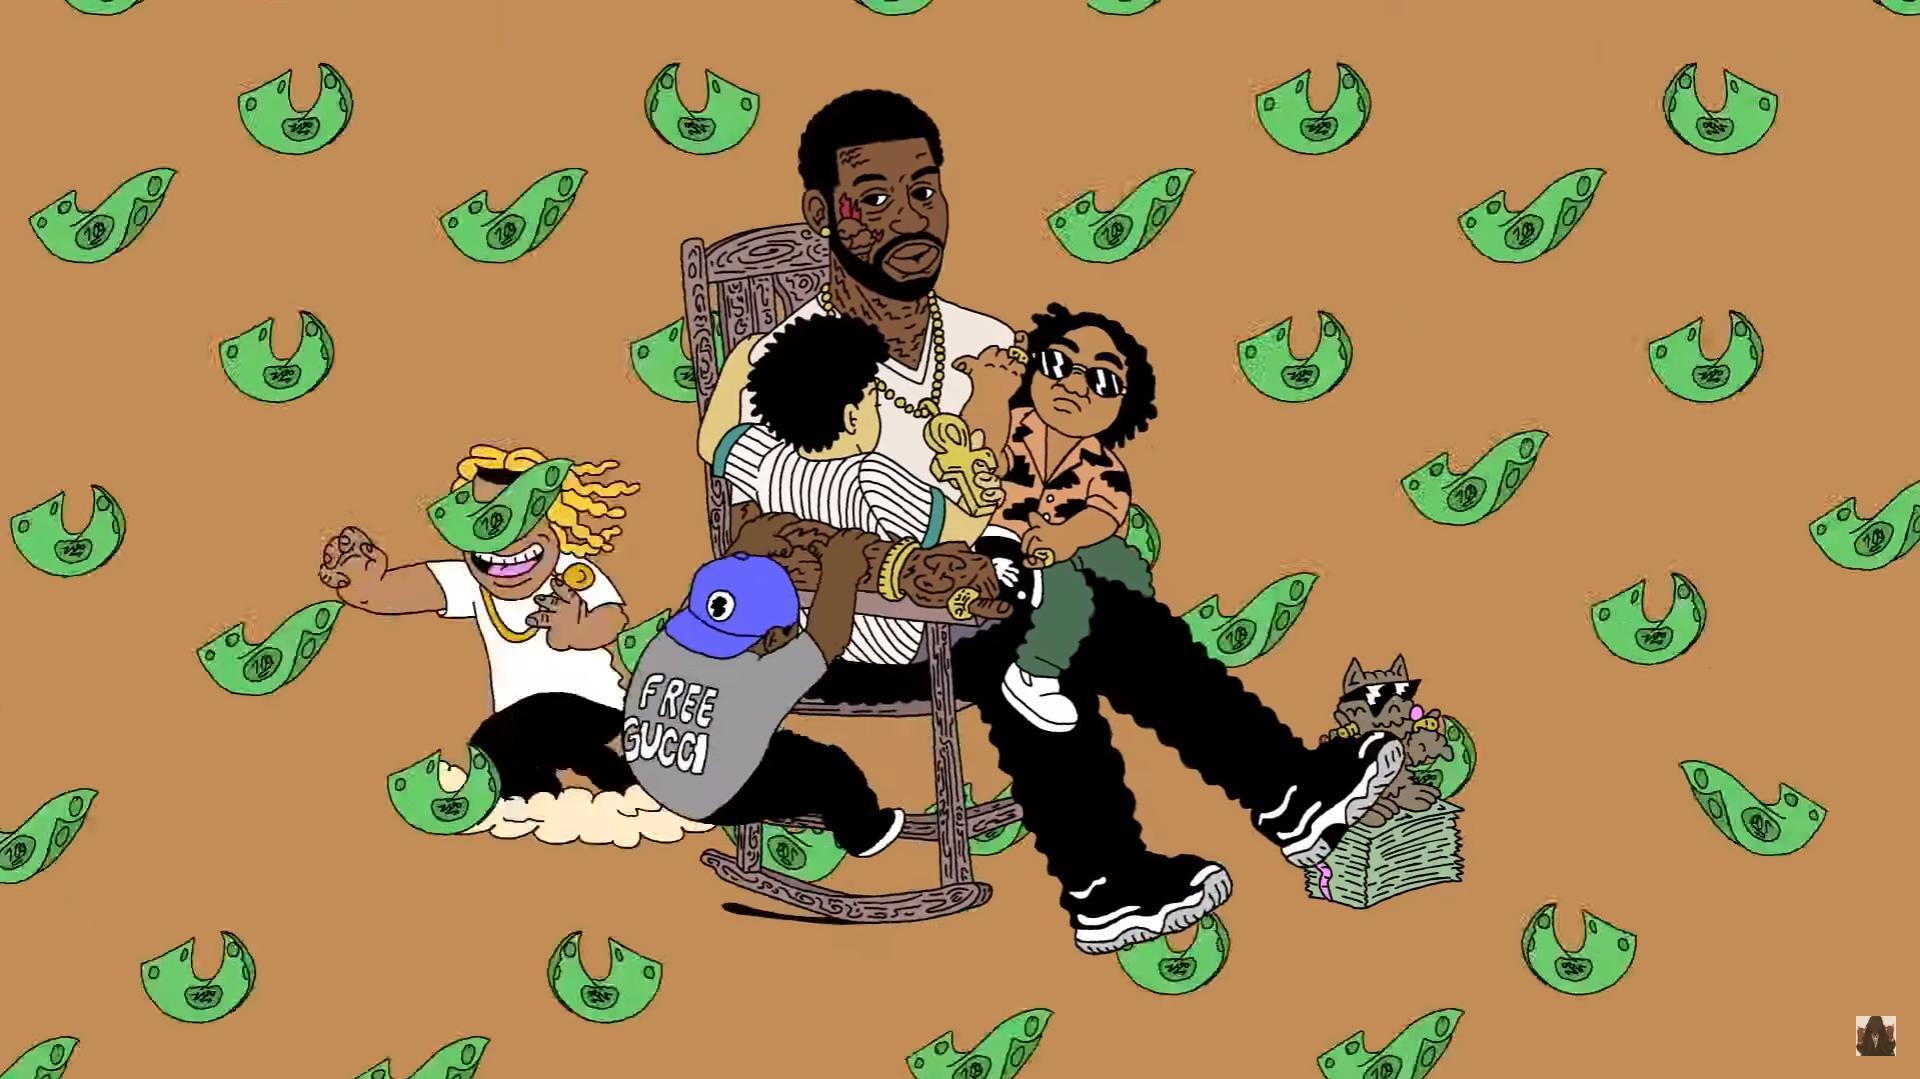 Cartoon Gucci Wallpapers - Top Free Cartoon Gucci Backgrounds